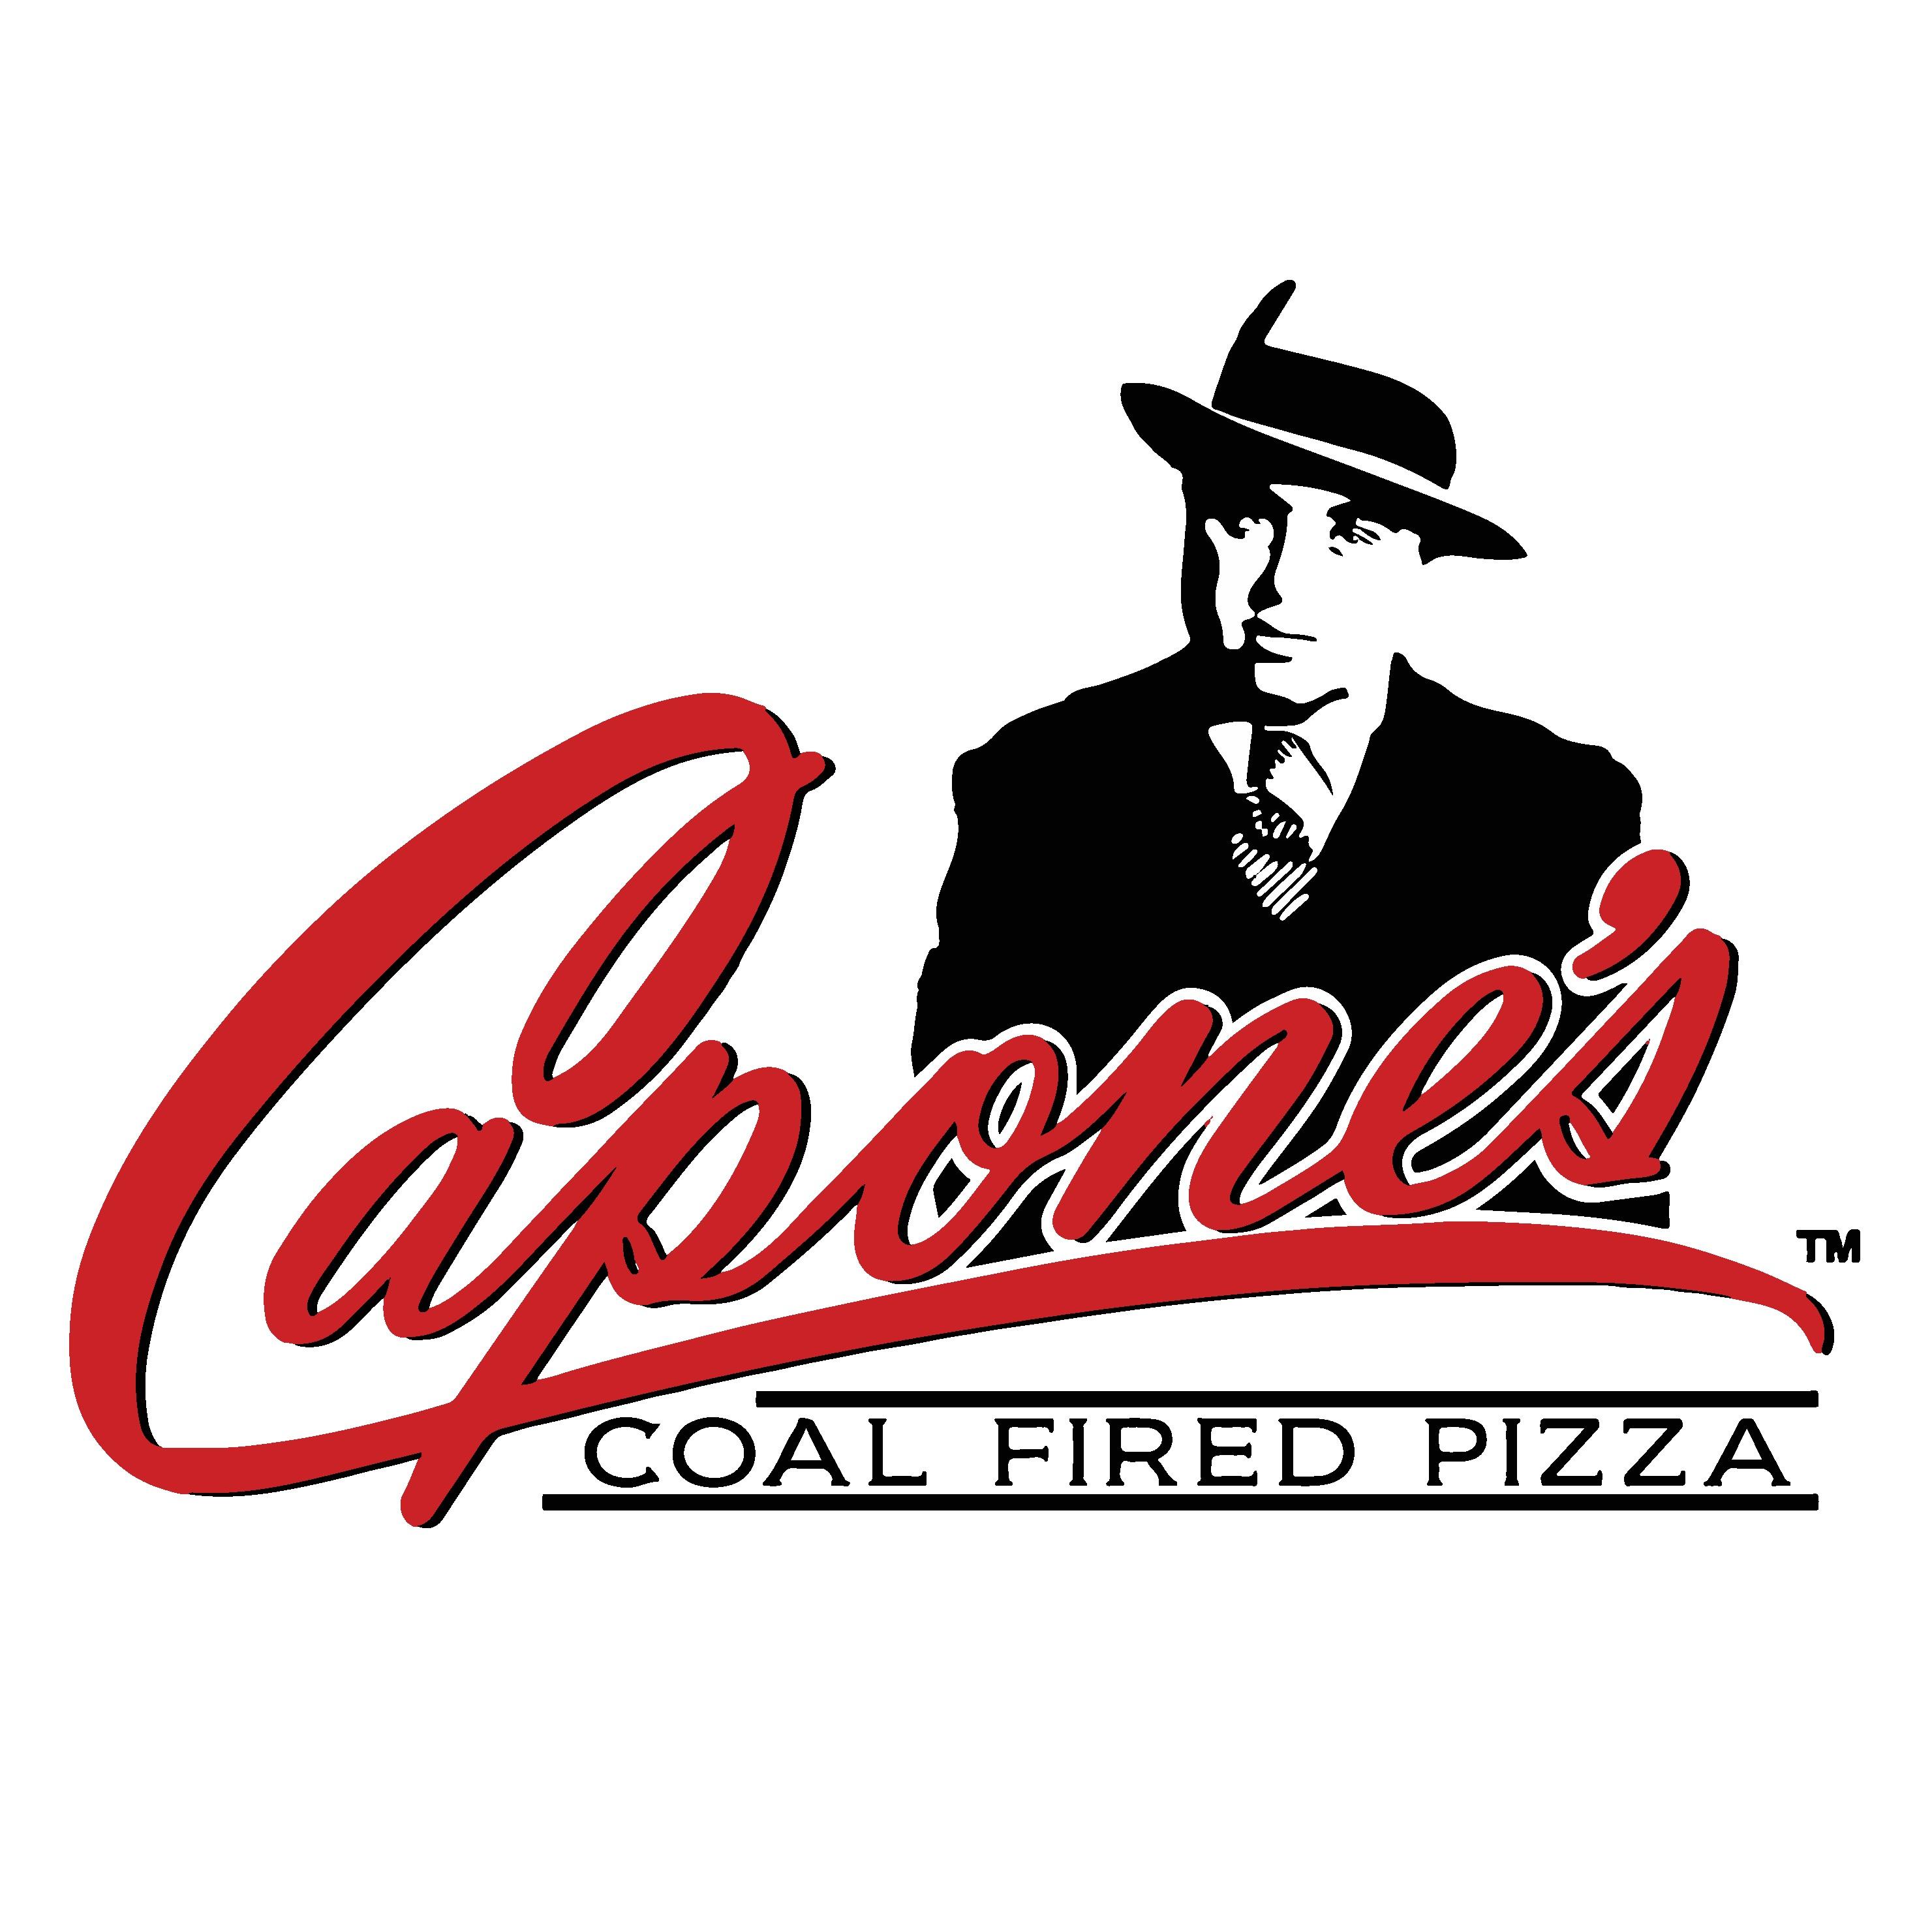 Capone's Coal Fired Pizza Logo